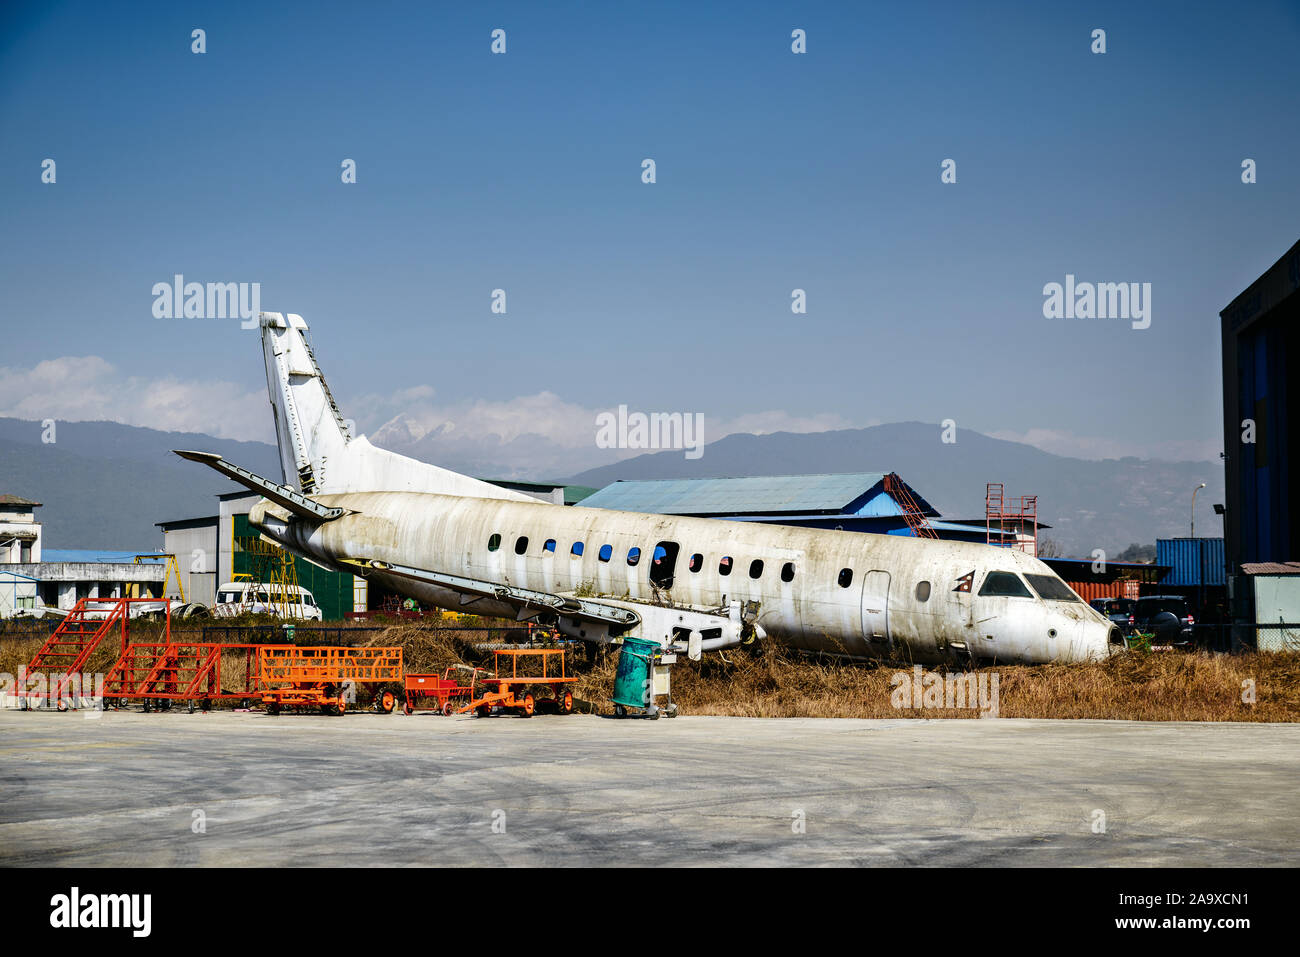 Scrapped airplane at Kathmandu airport in Nepal Stock Photo